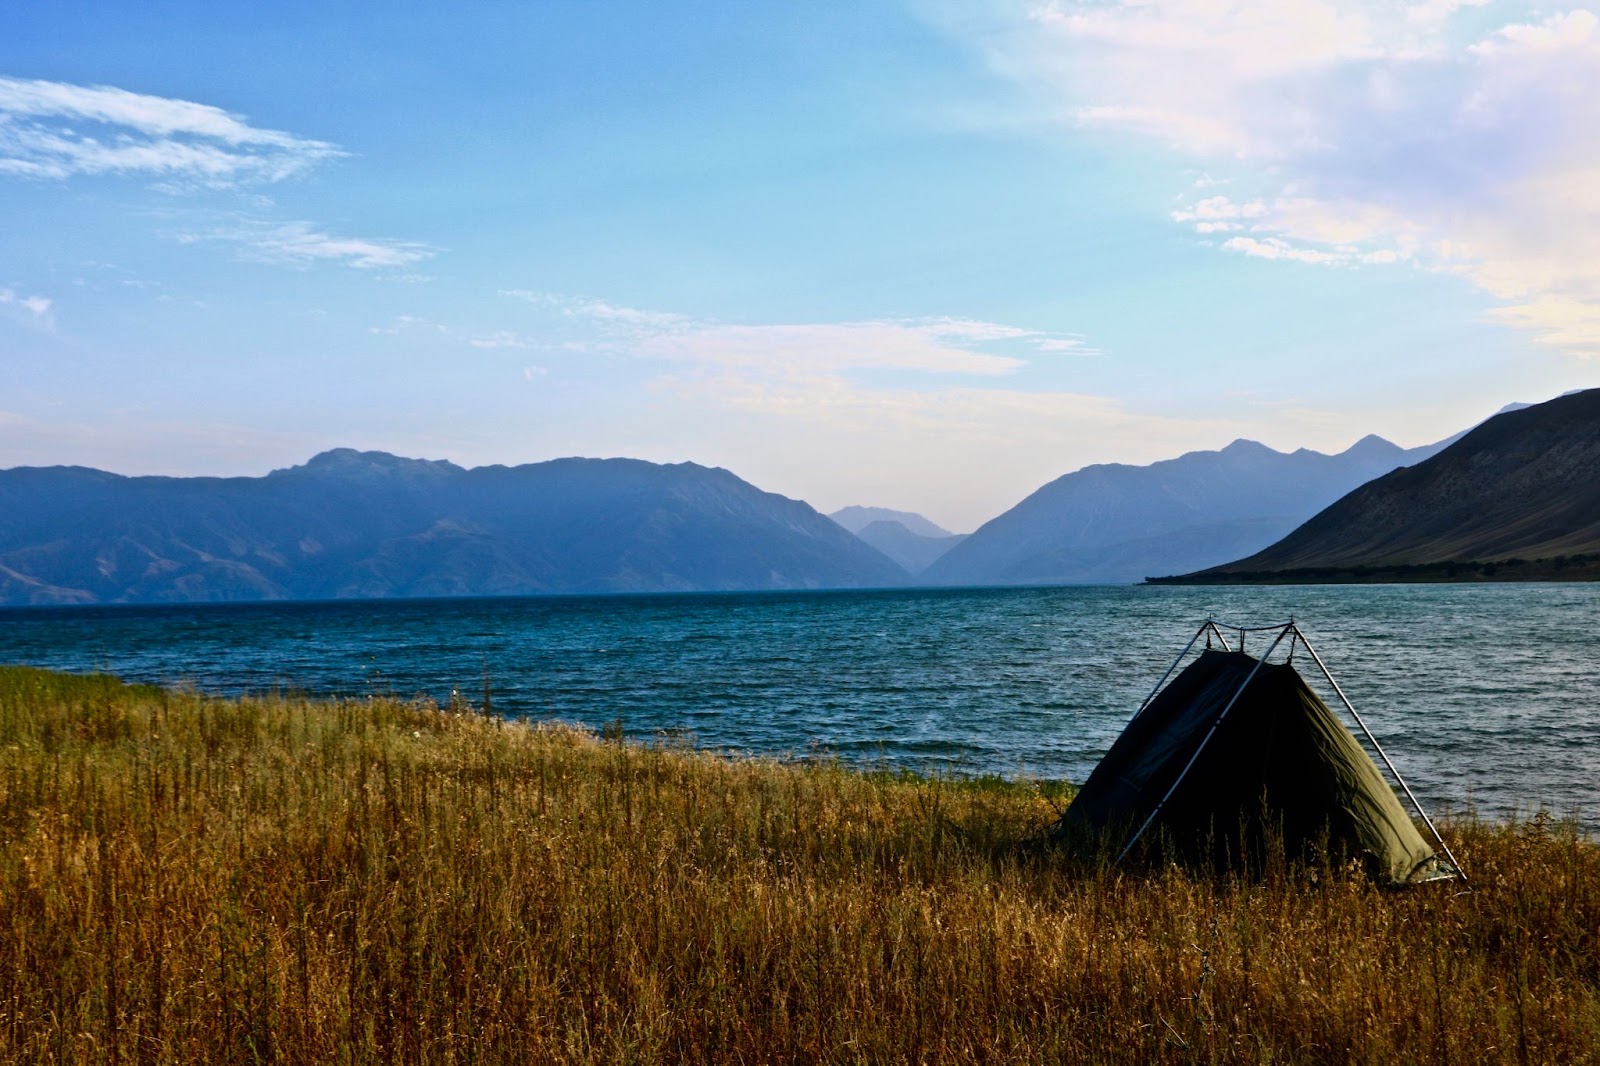 Camping in Kyrgyzstan